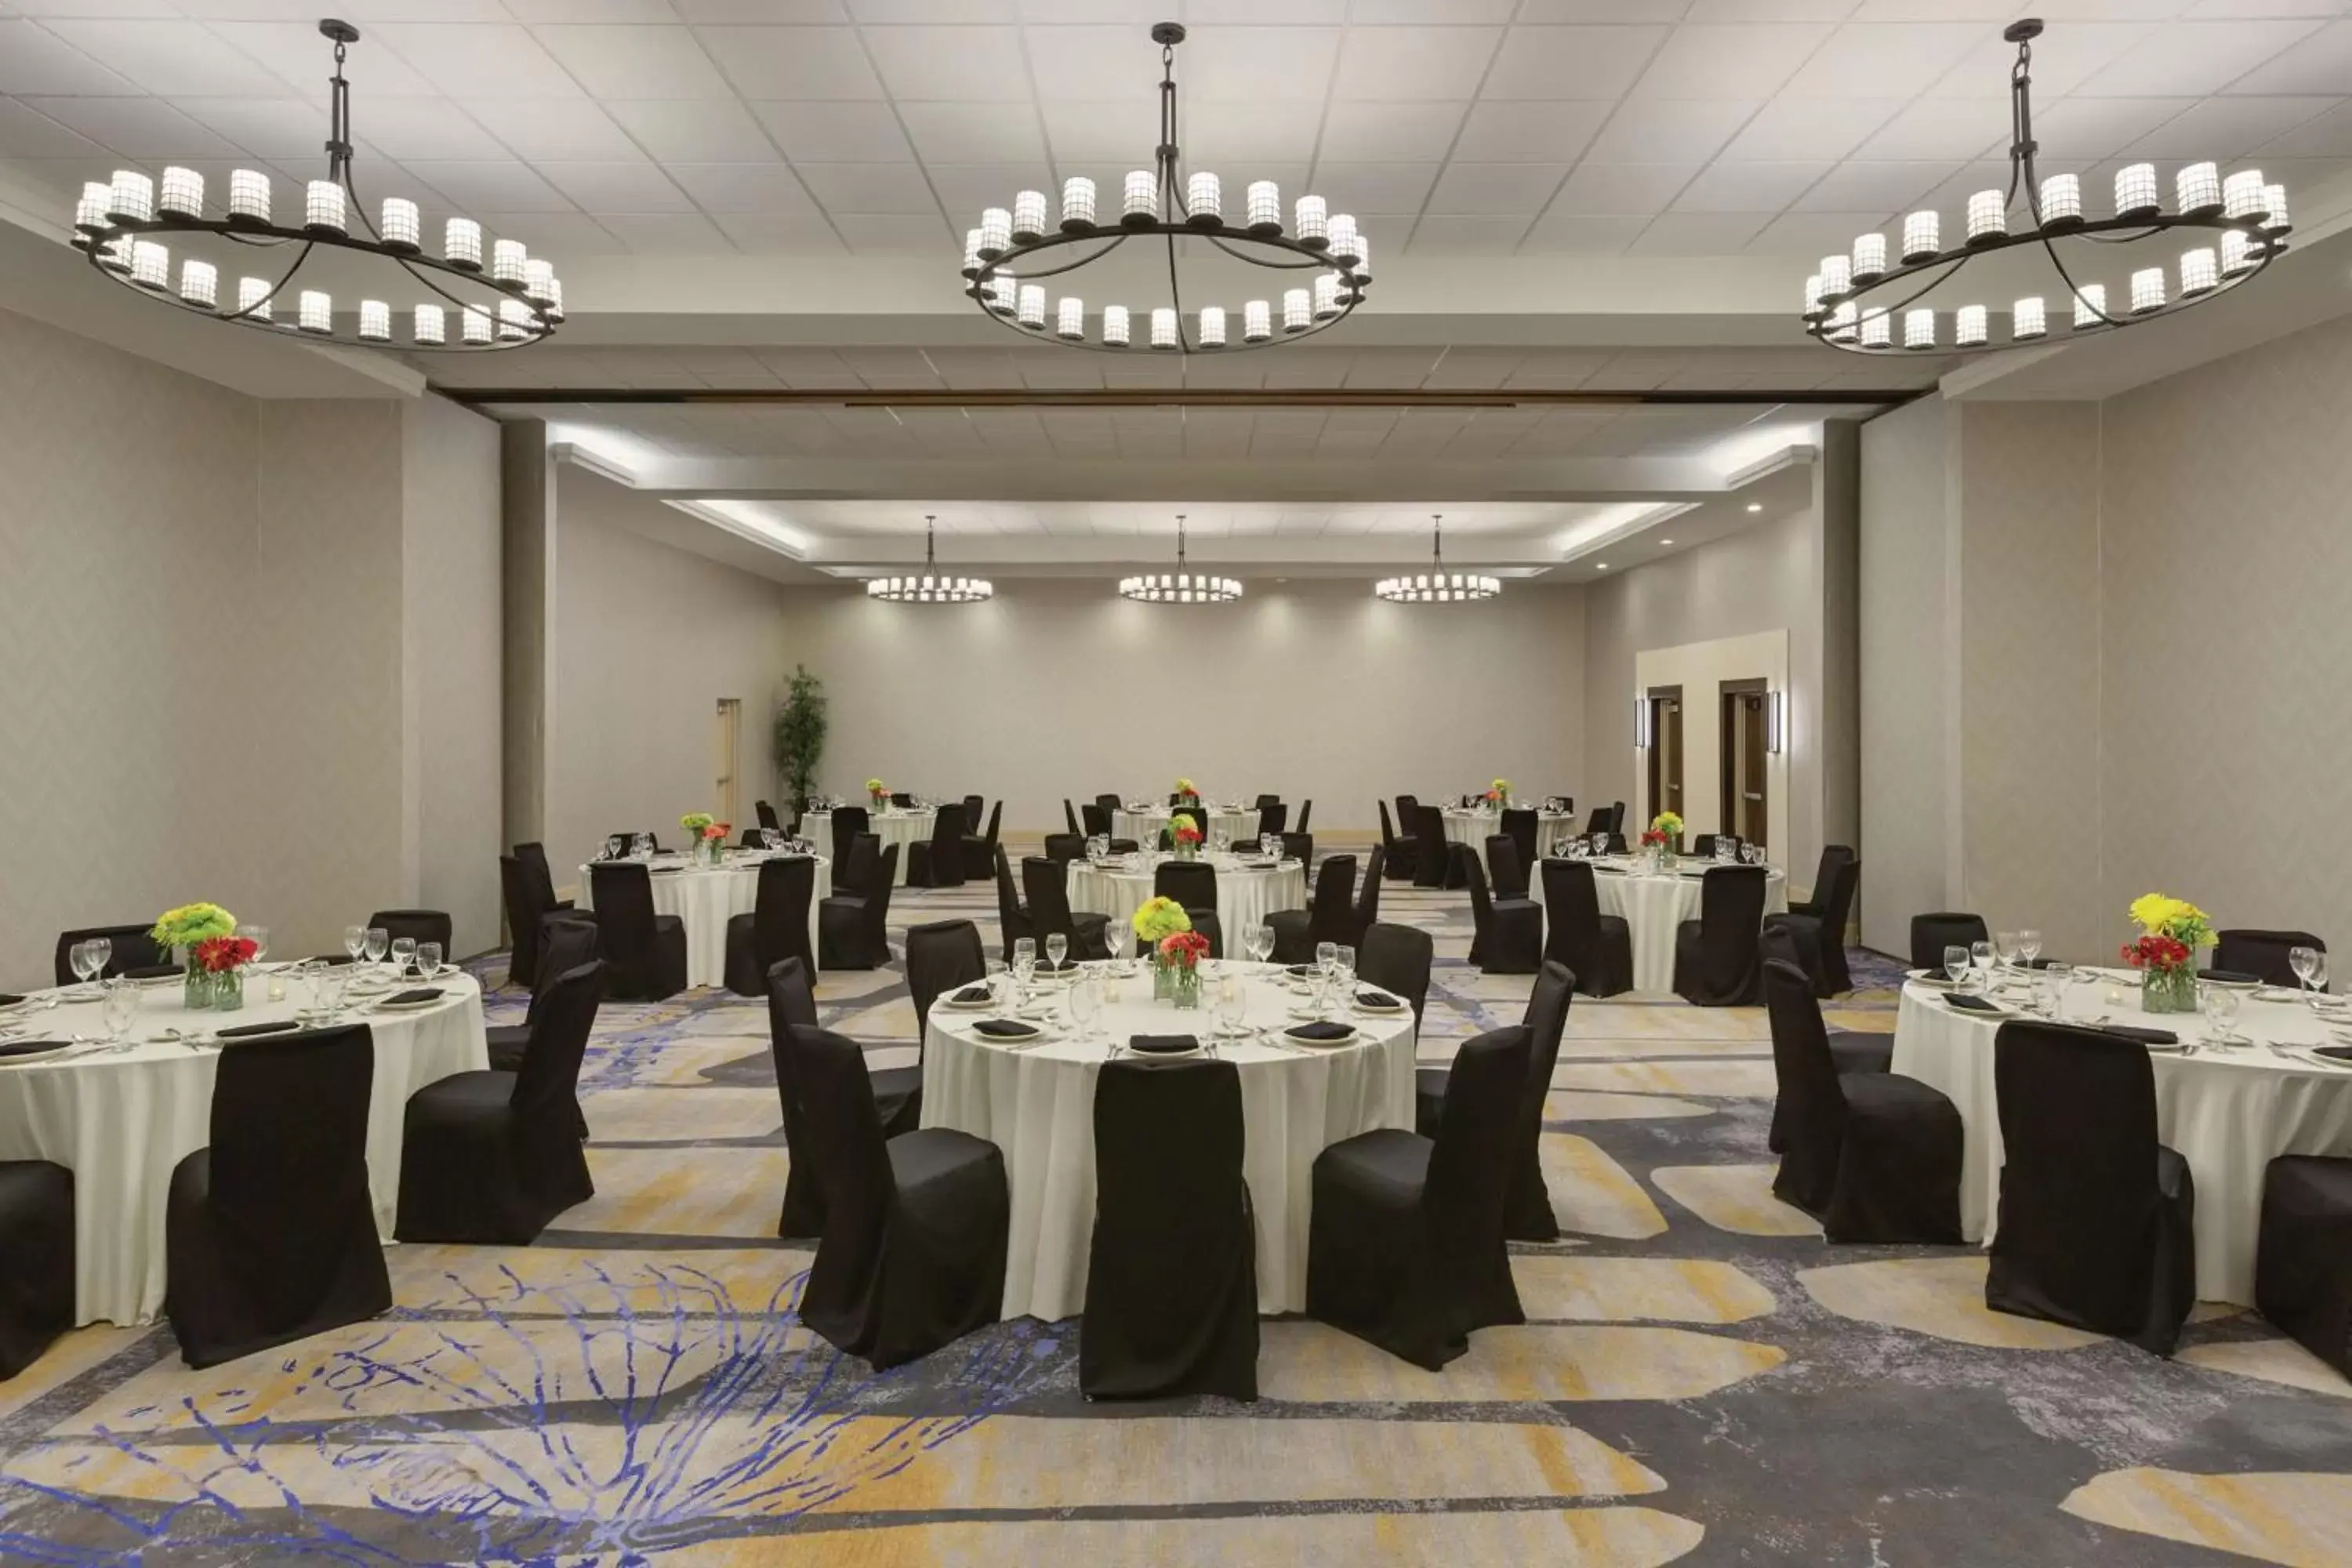 Meeting/conference room, Banquet Facilities in Hilton Scottsdale Resort & Villas